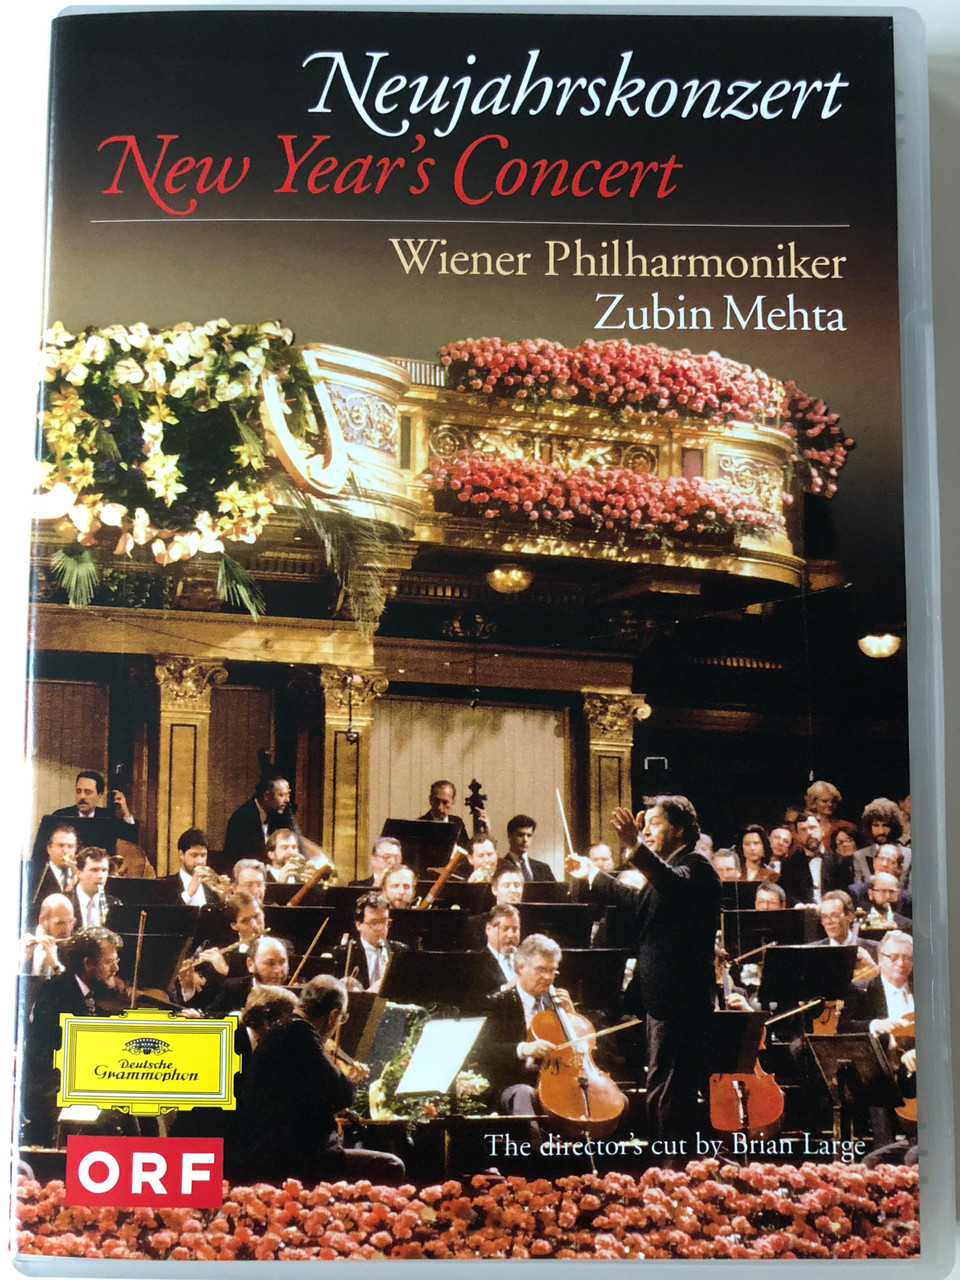 Neujahrskonzert DVD 1990 New Year's Concert / Directed by Brian Large /  Wiener Philharmoniker / Conducted by Zubin Mehta - bibleinmylanguage